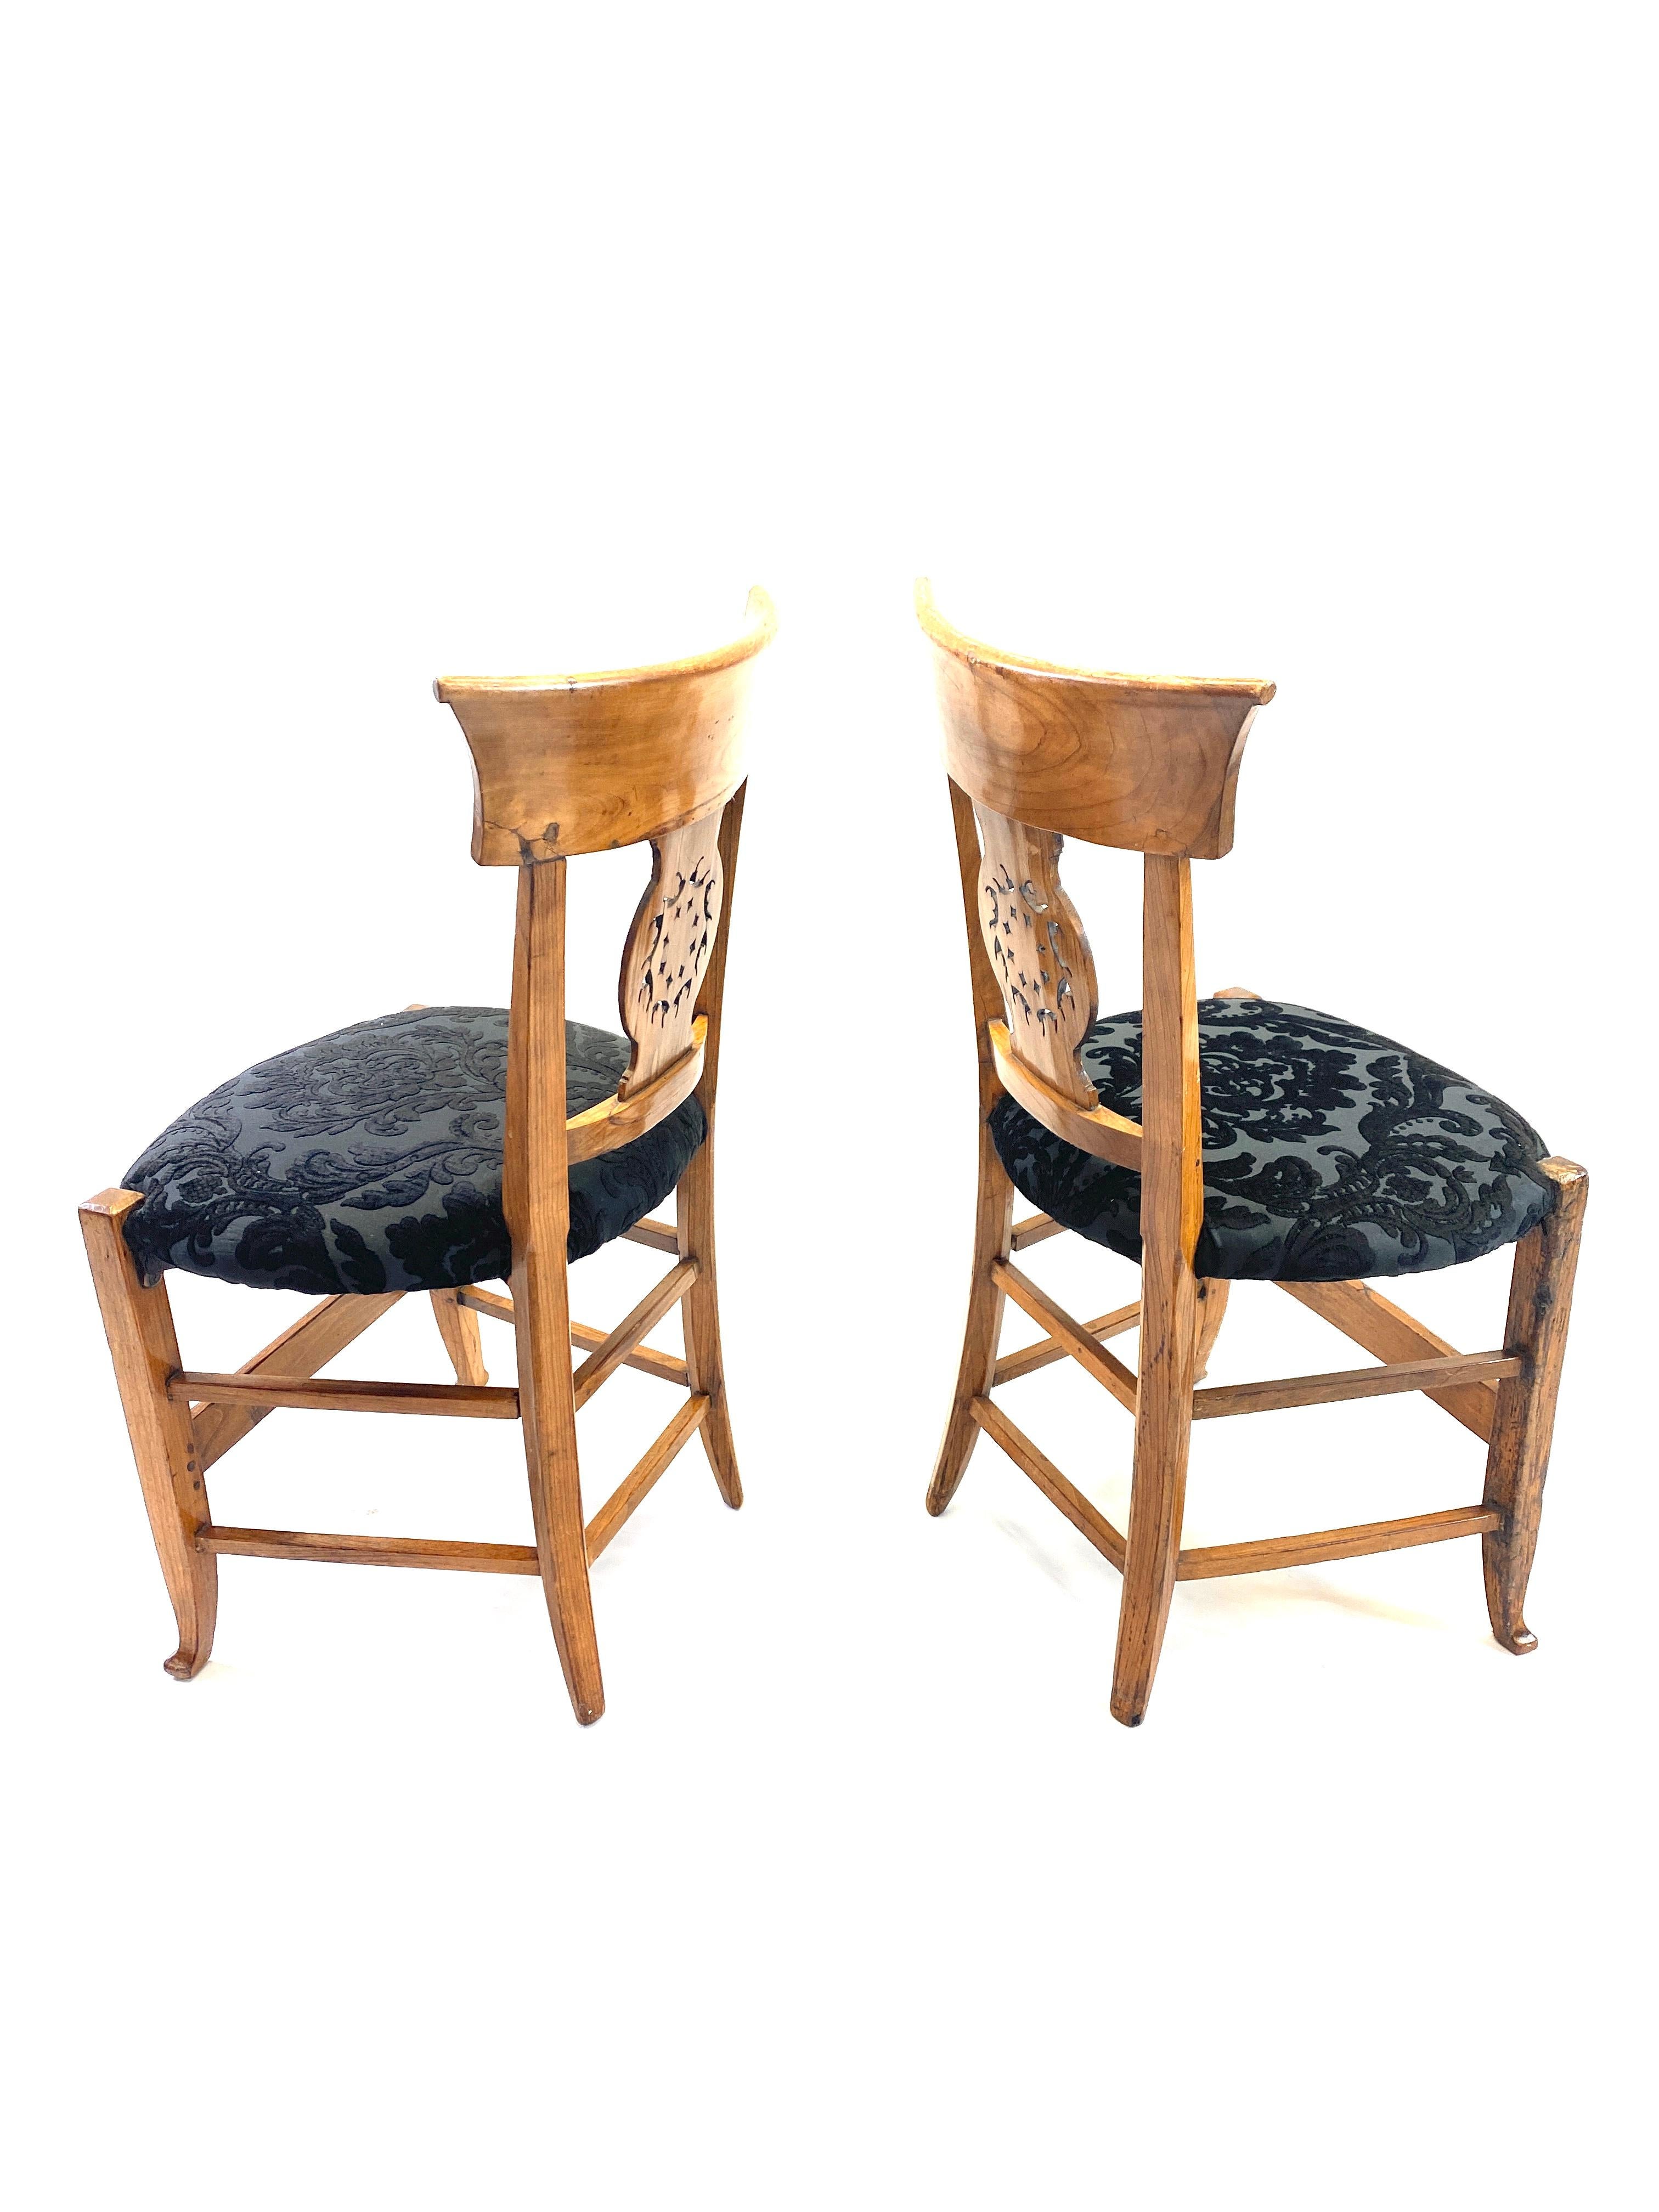 A handsome pair of 19th century walnut Biedermeier chairs.